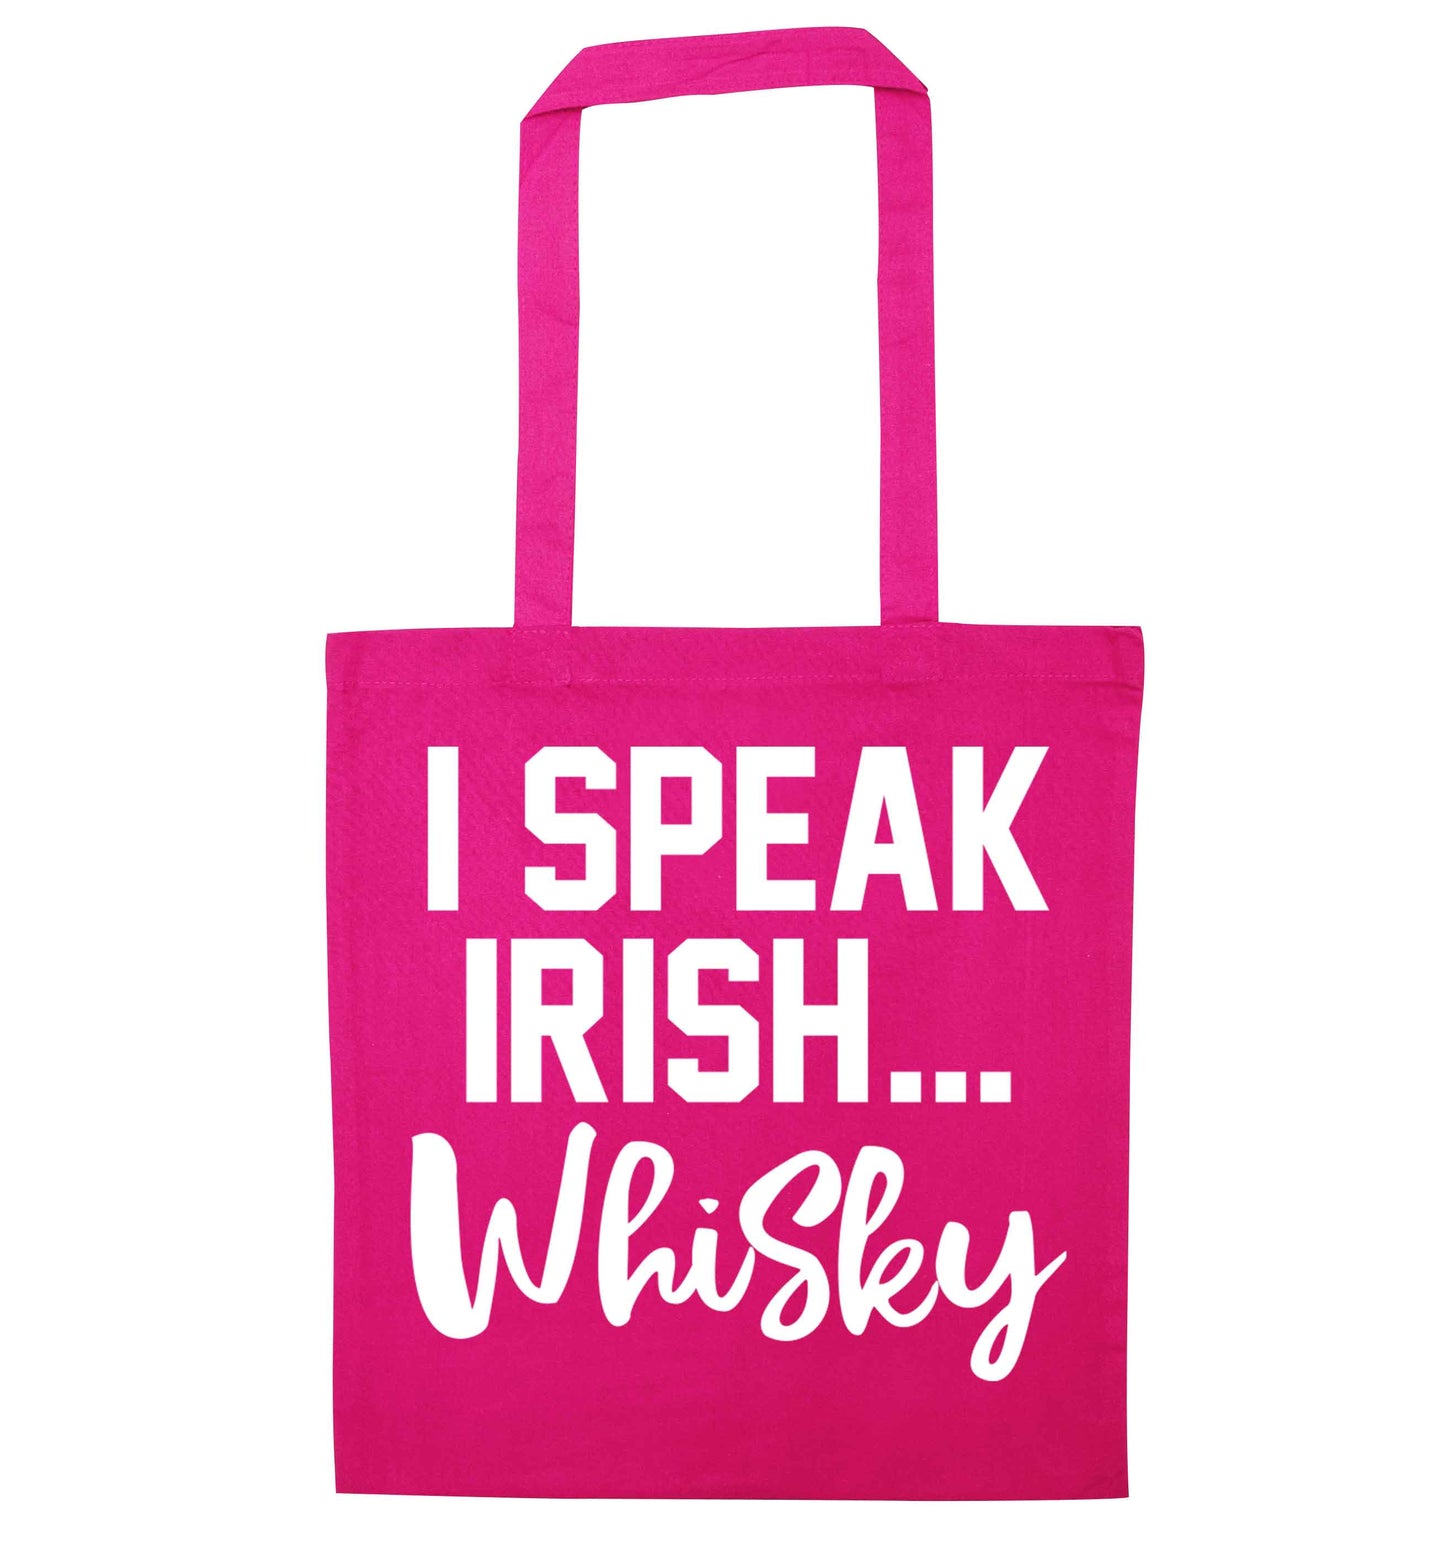 I speak Irish whisky pink tote bag